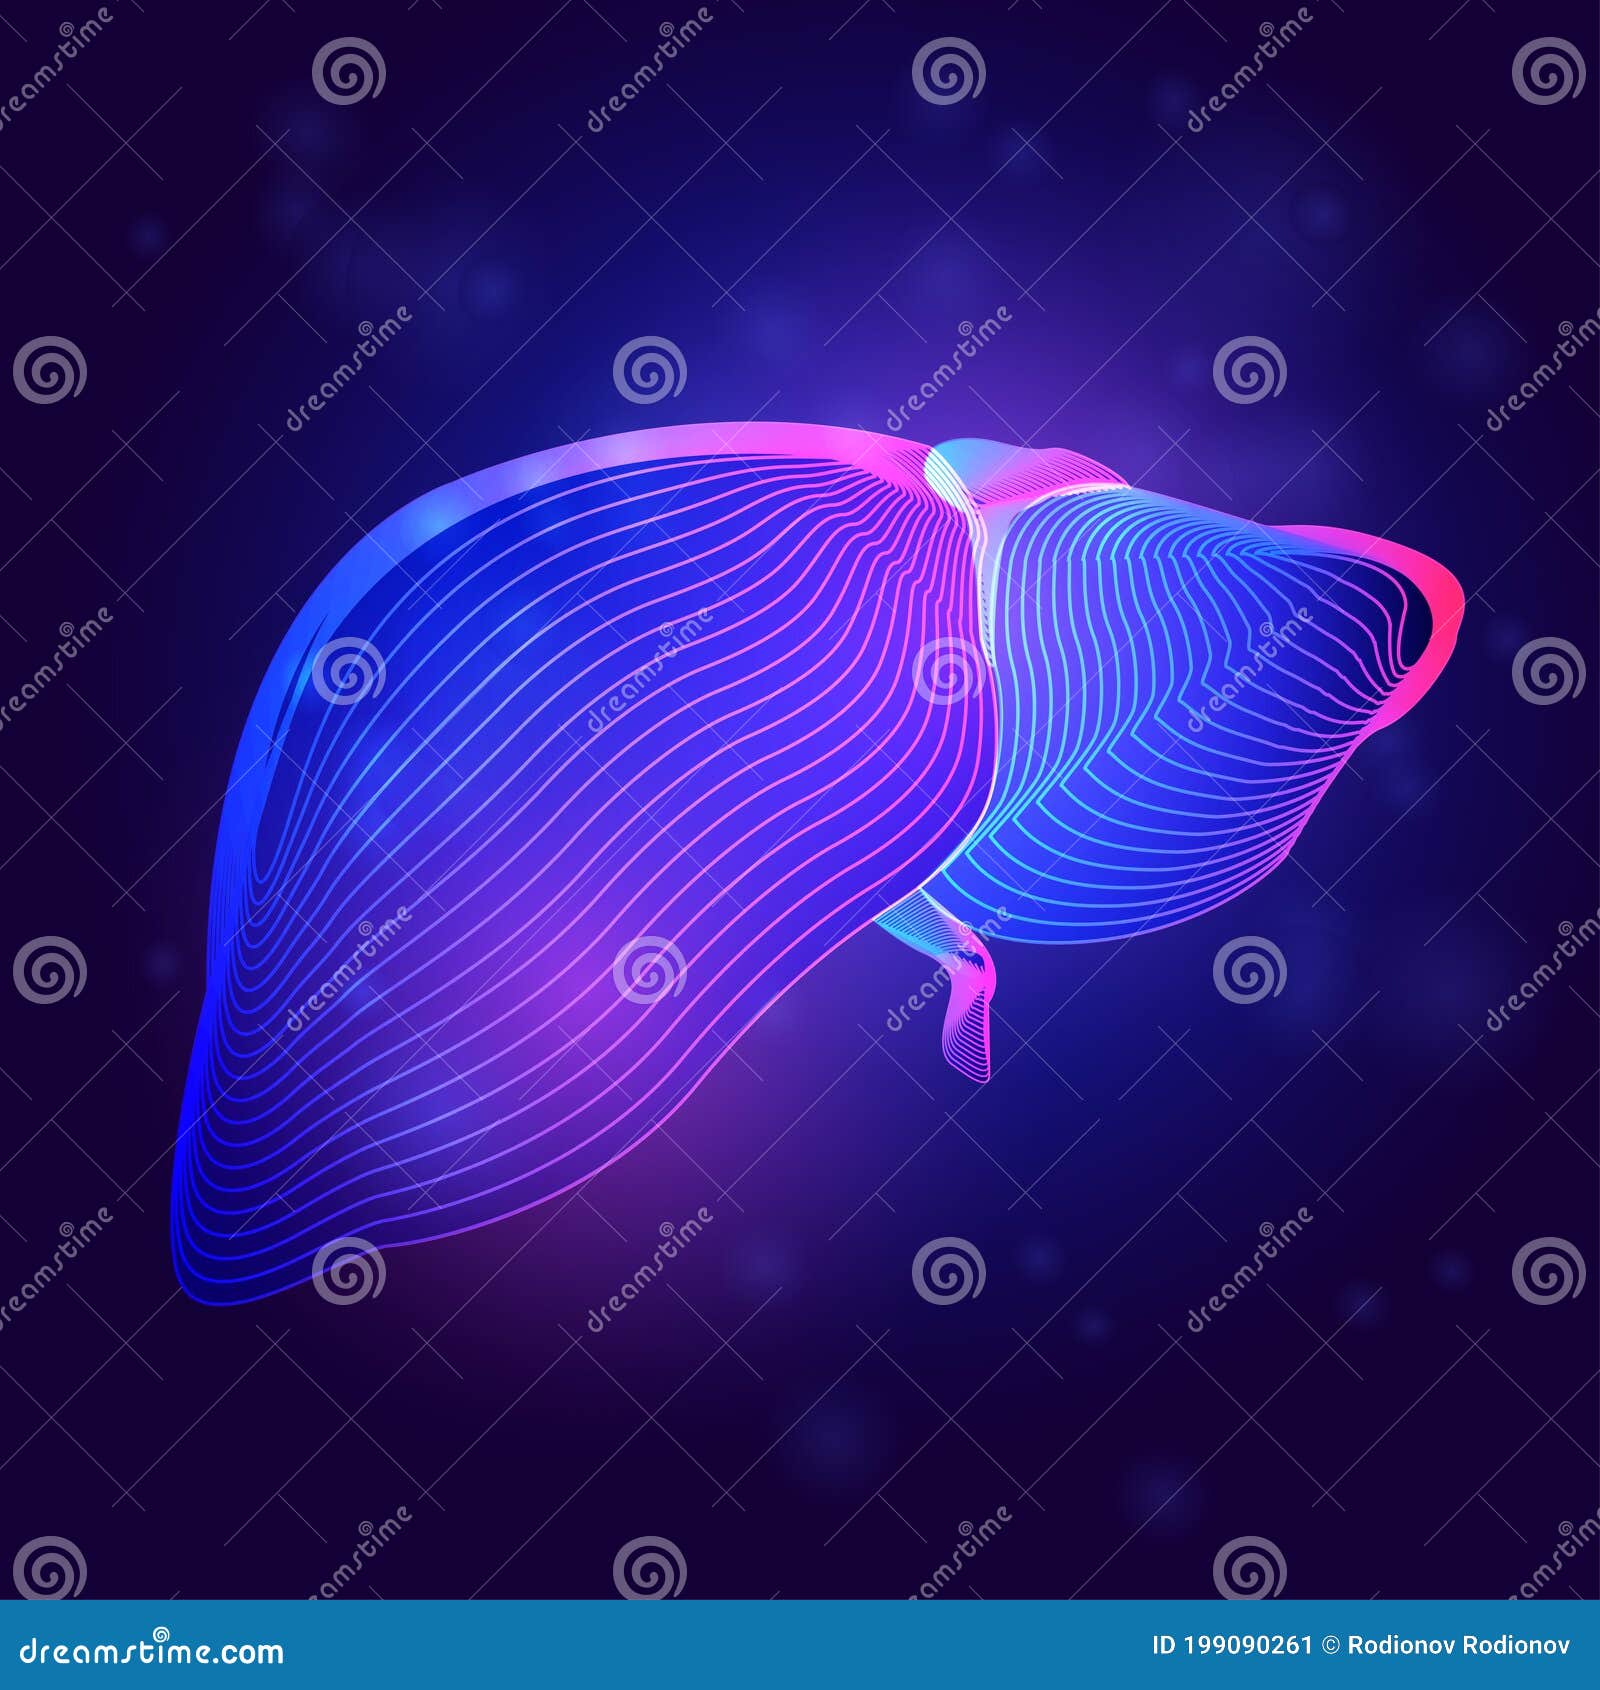 Human Liver Medical Structure Outline Vector Illustration Of Body Part